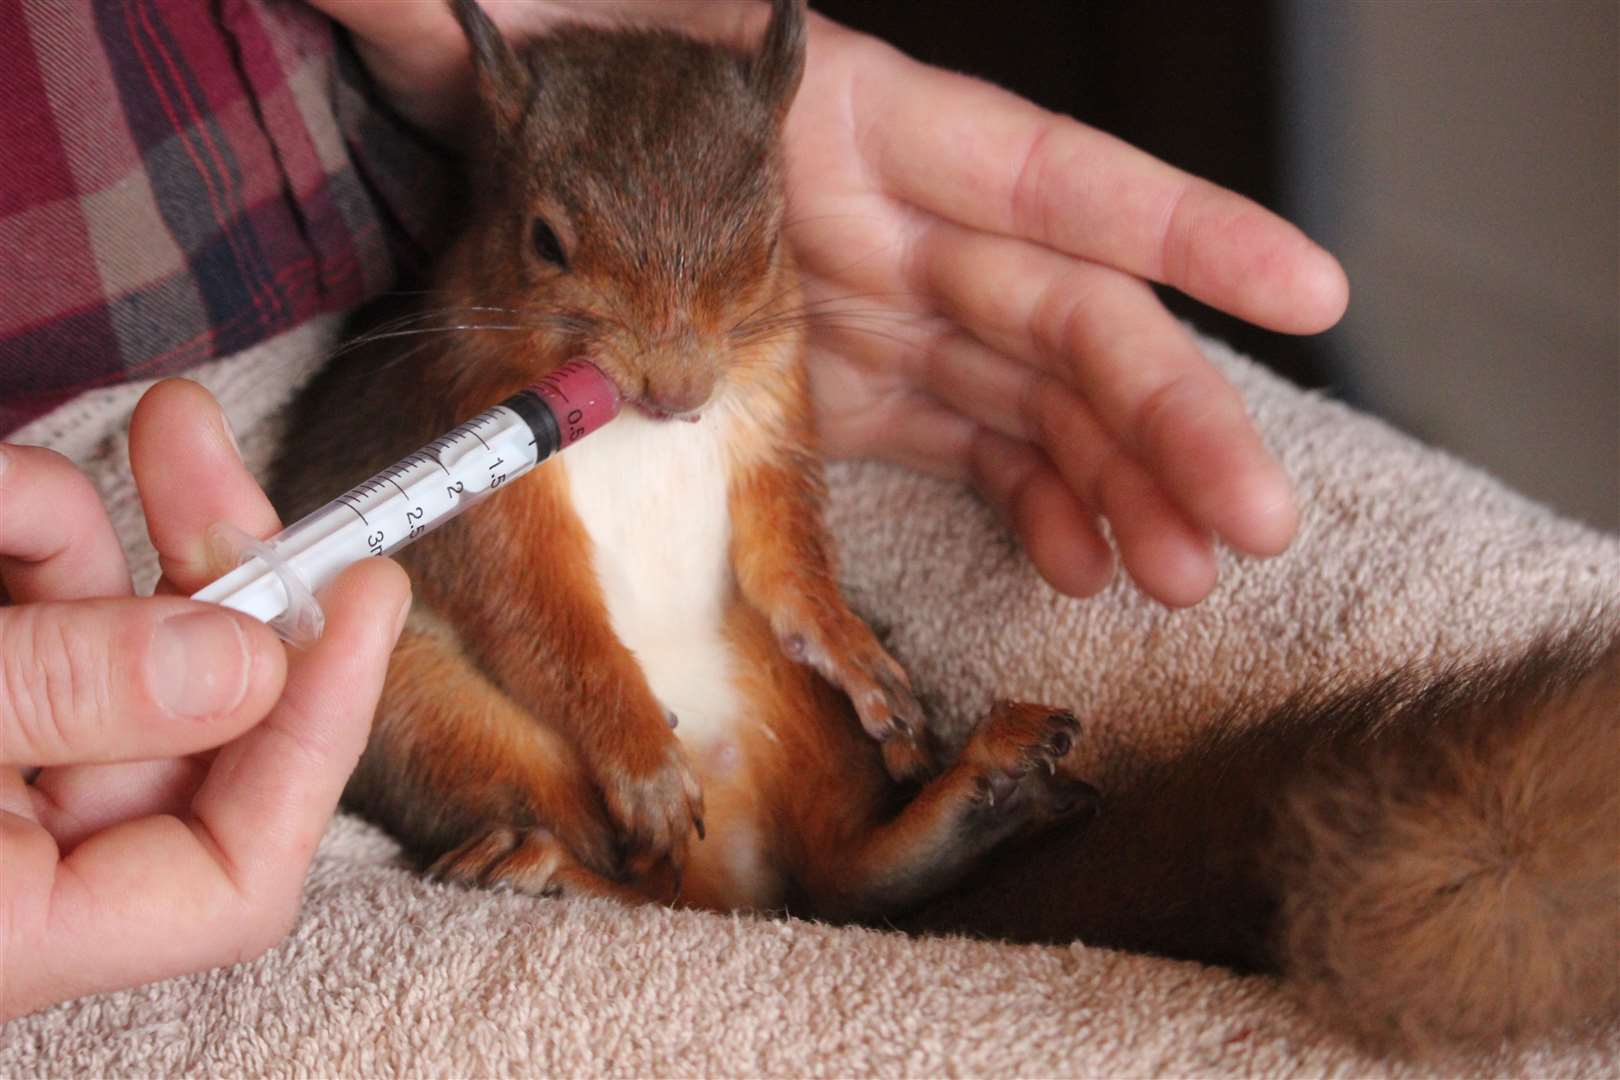 Squirrel being fed its milk.